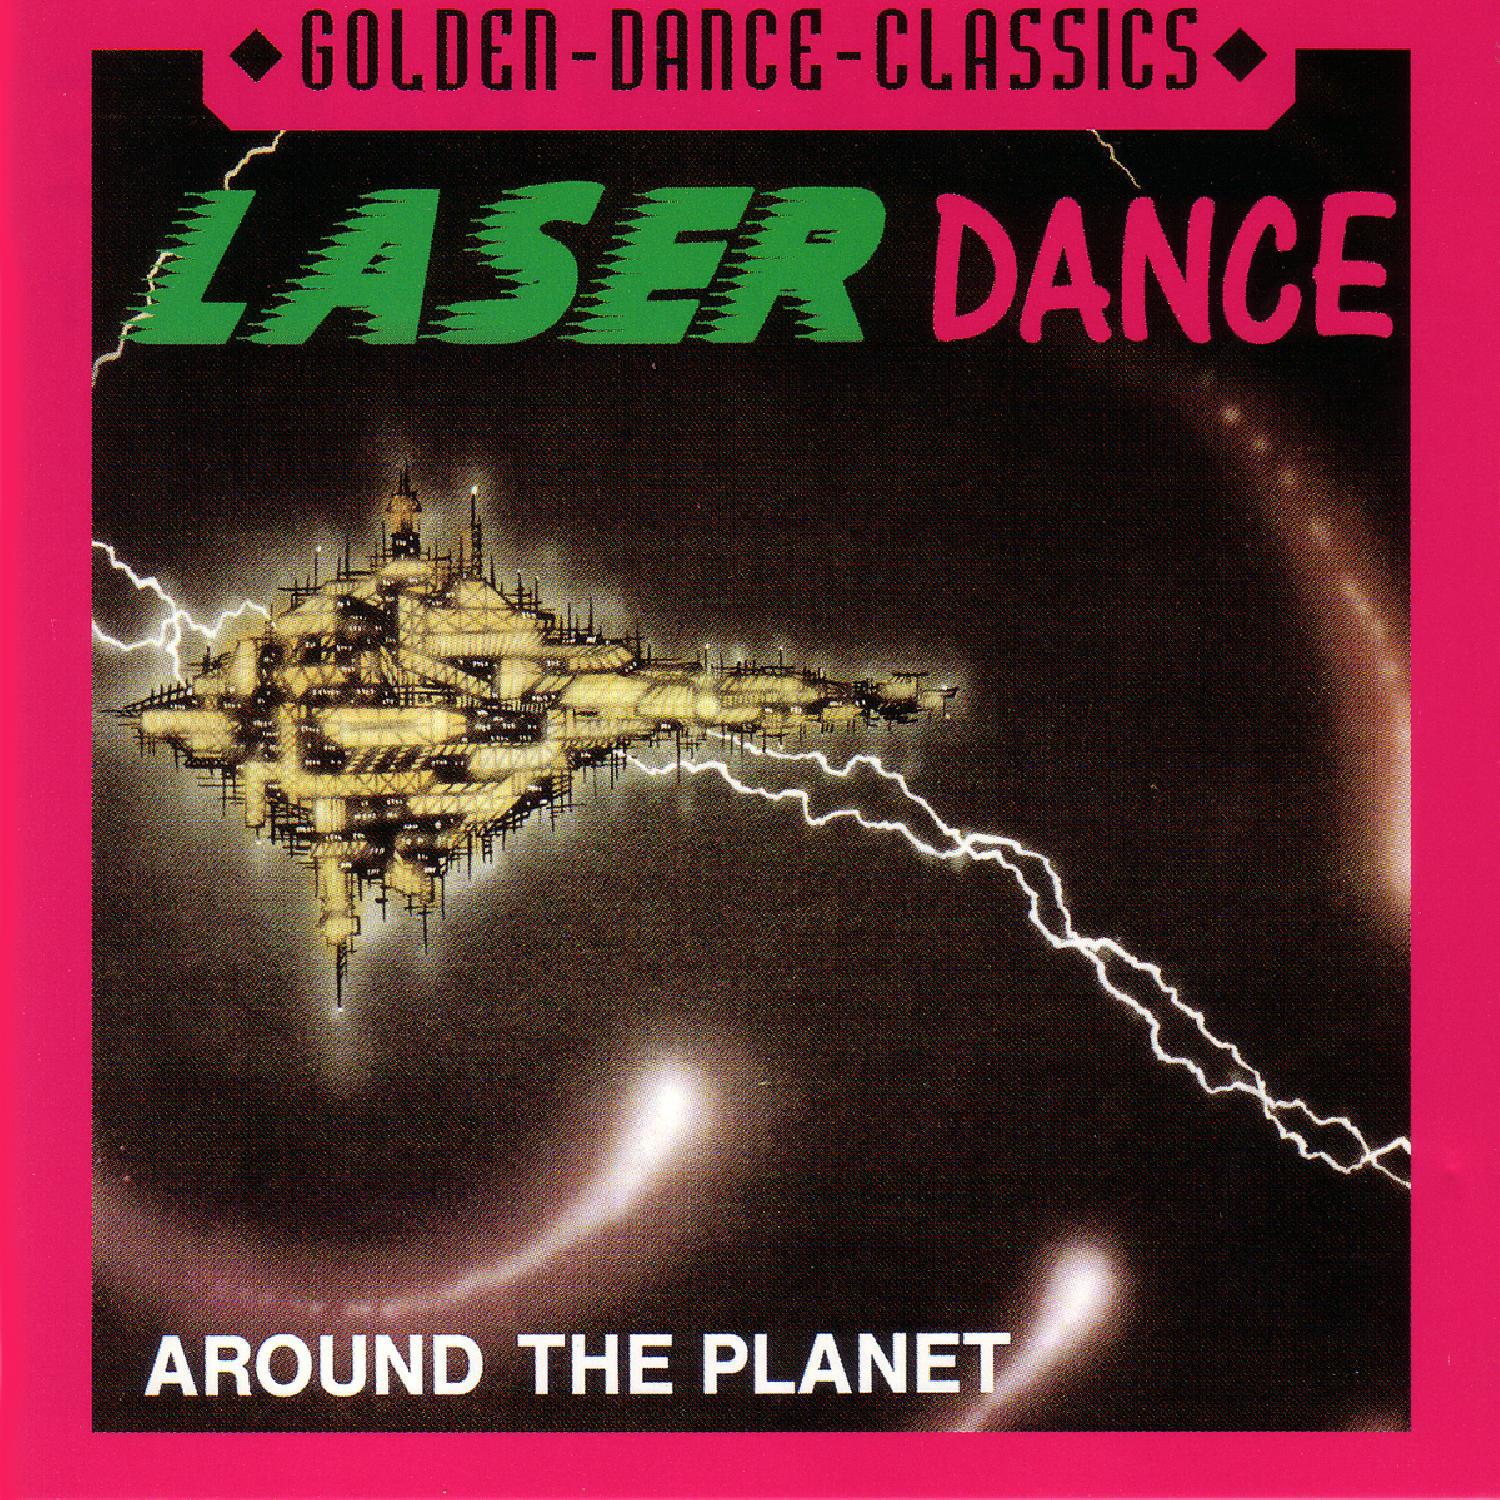 Laserdance - Battle Cry (Remix)